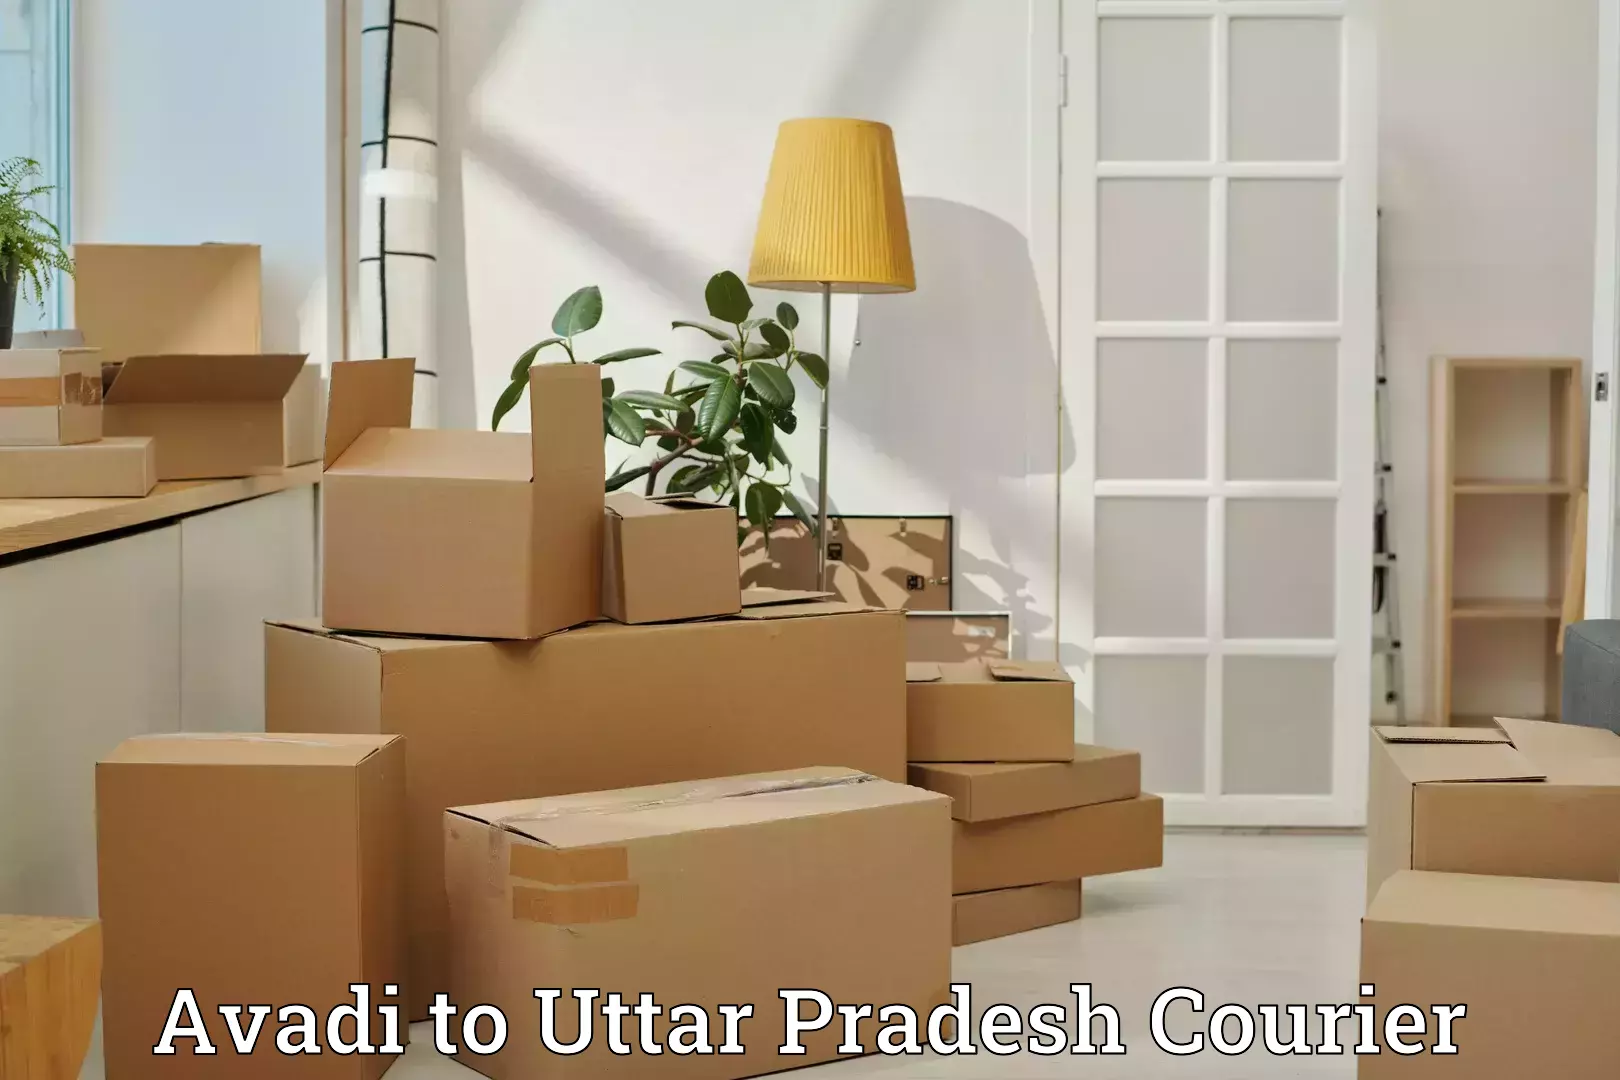 Emergency baggage service Avadi to Uttar Pradesh